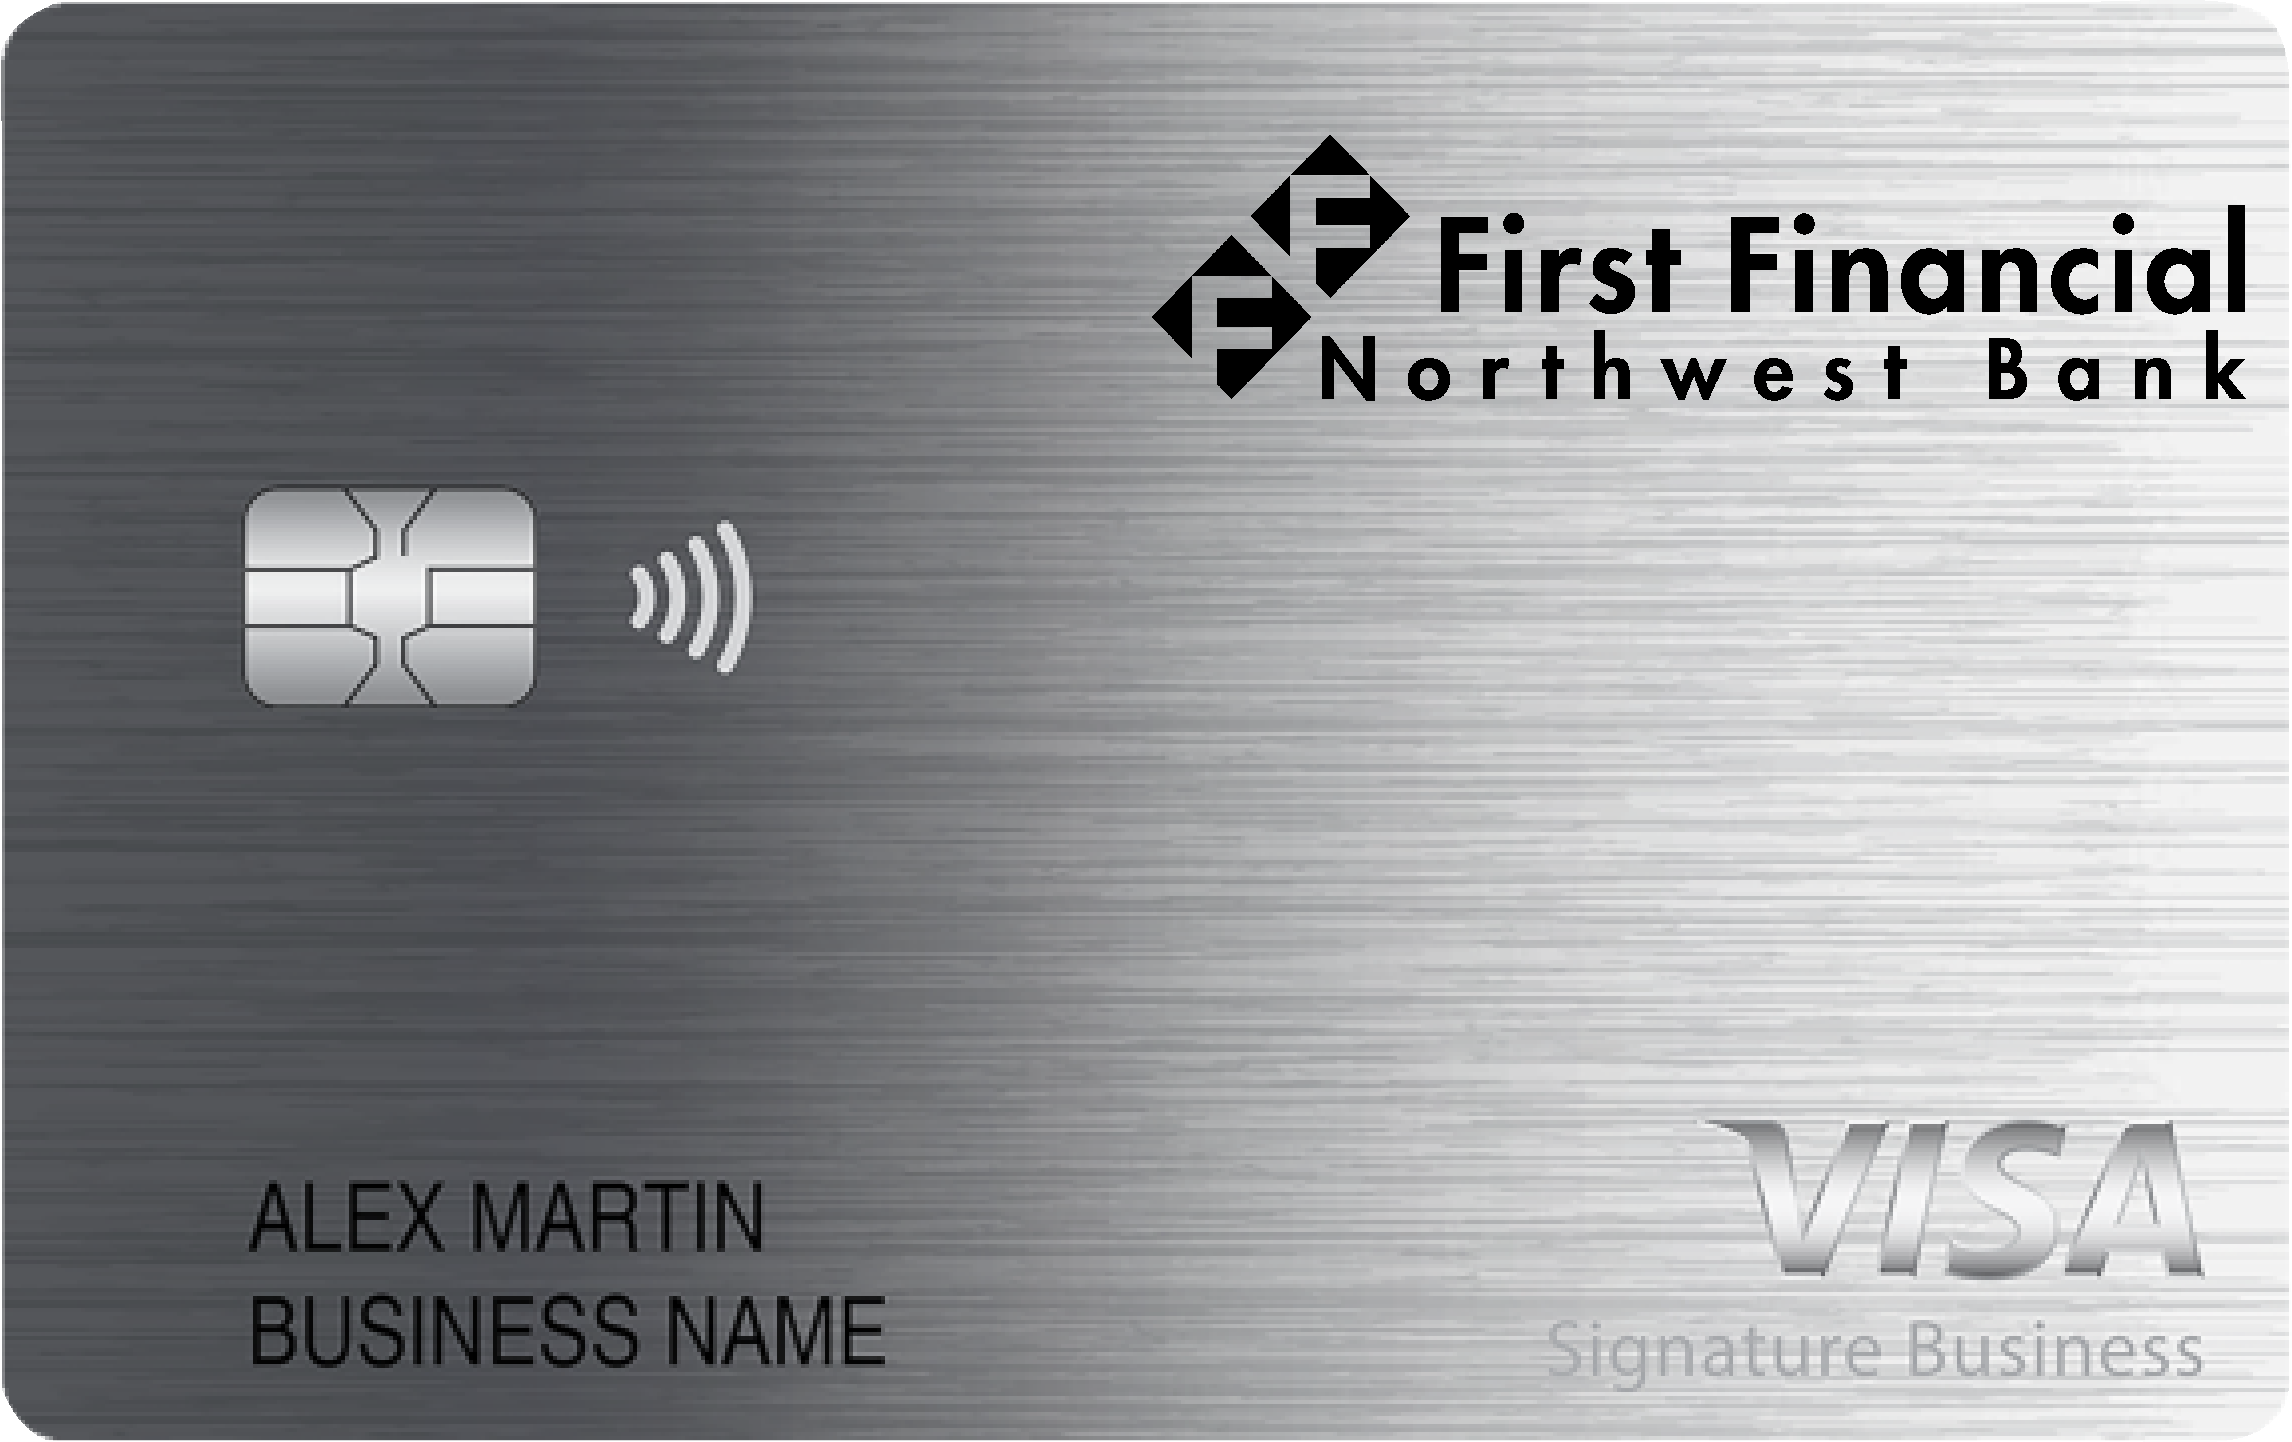 First Financial Northwest Bank Smart Business Rewards Card